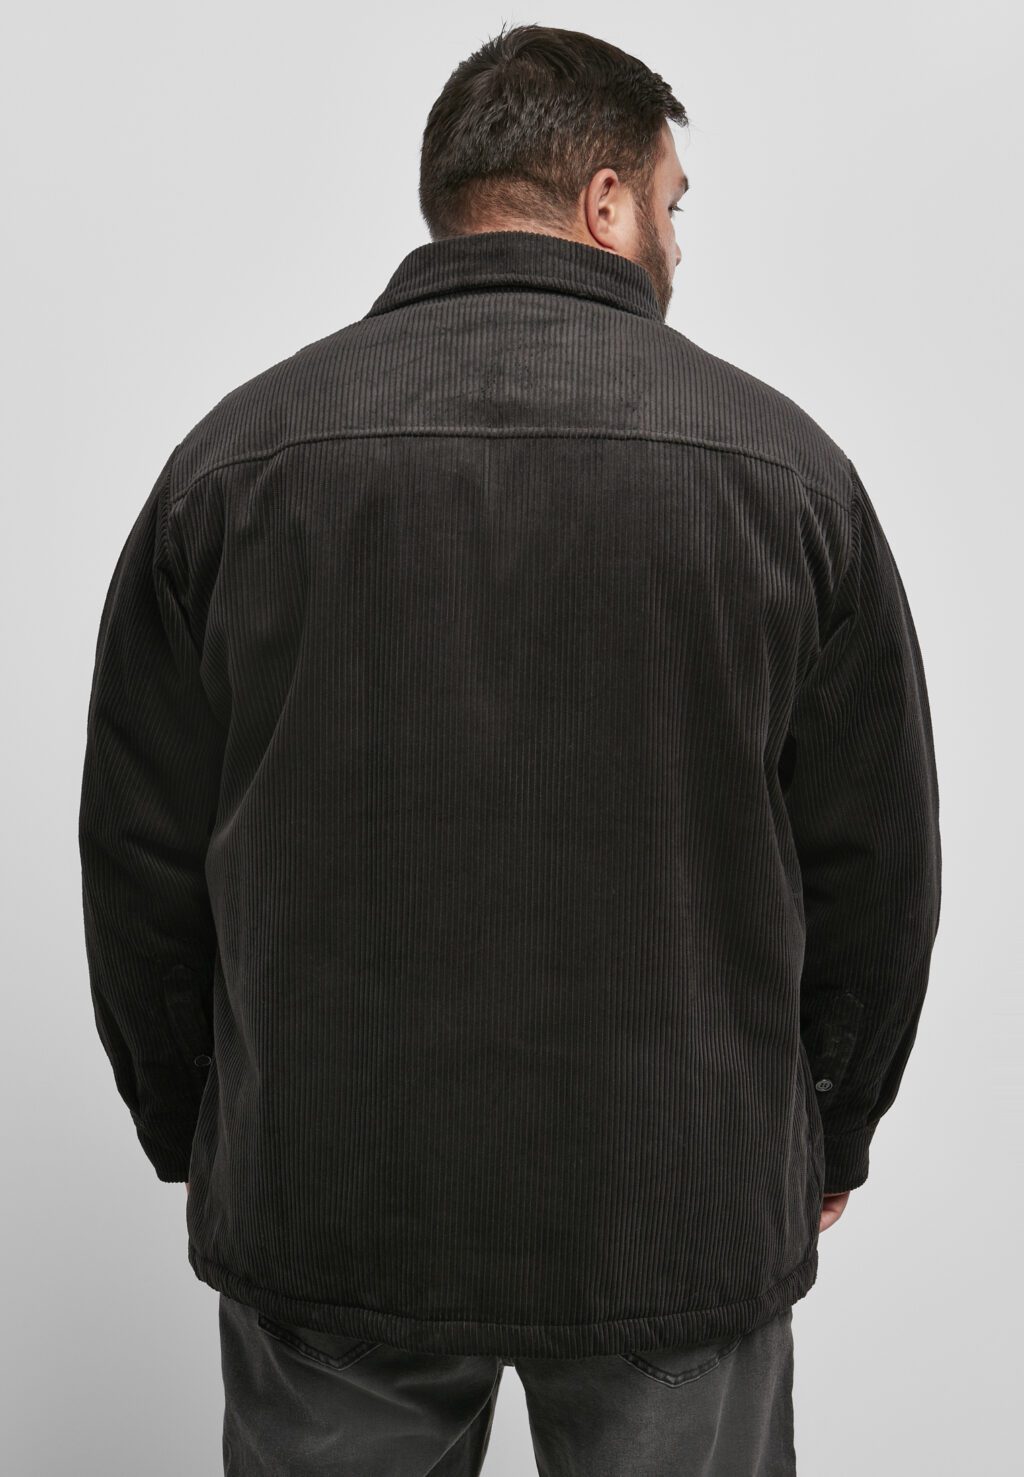 Urban Classics Corduroy Shirt Jacket black TB3932